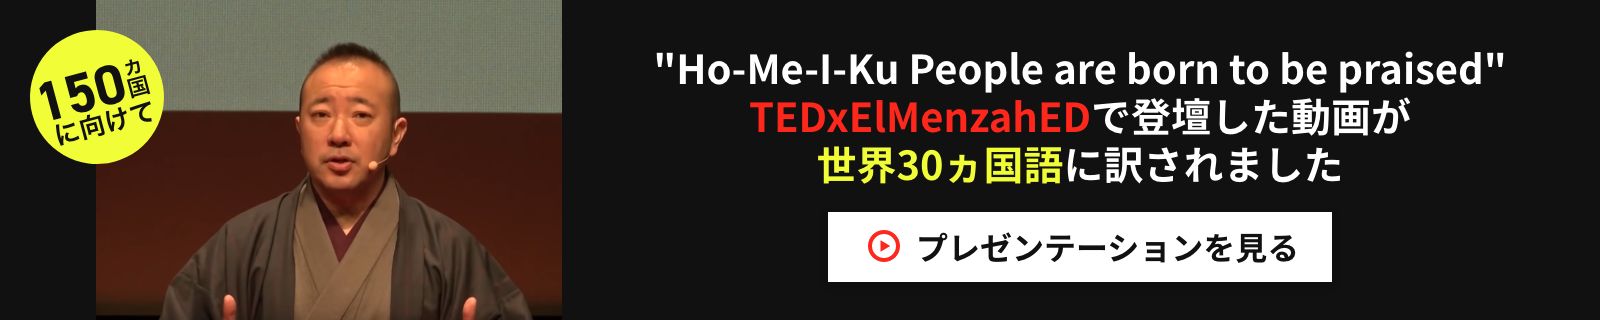 Ho-Me-I-Ku People are born to be praised TEDxElMenzahEDで登壇した動画が世界30ヵ国語に訳されました プレゼンテーションを見る